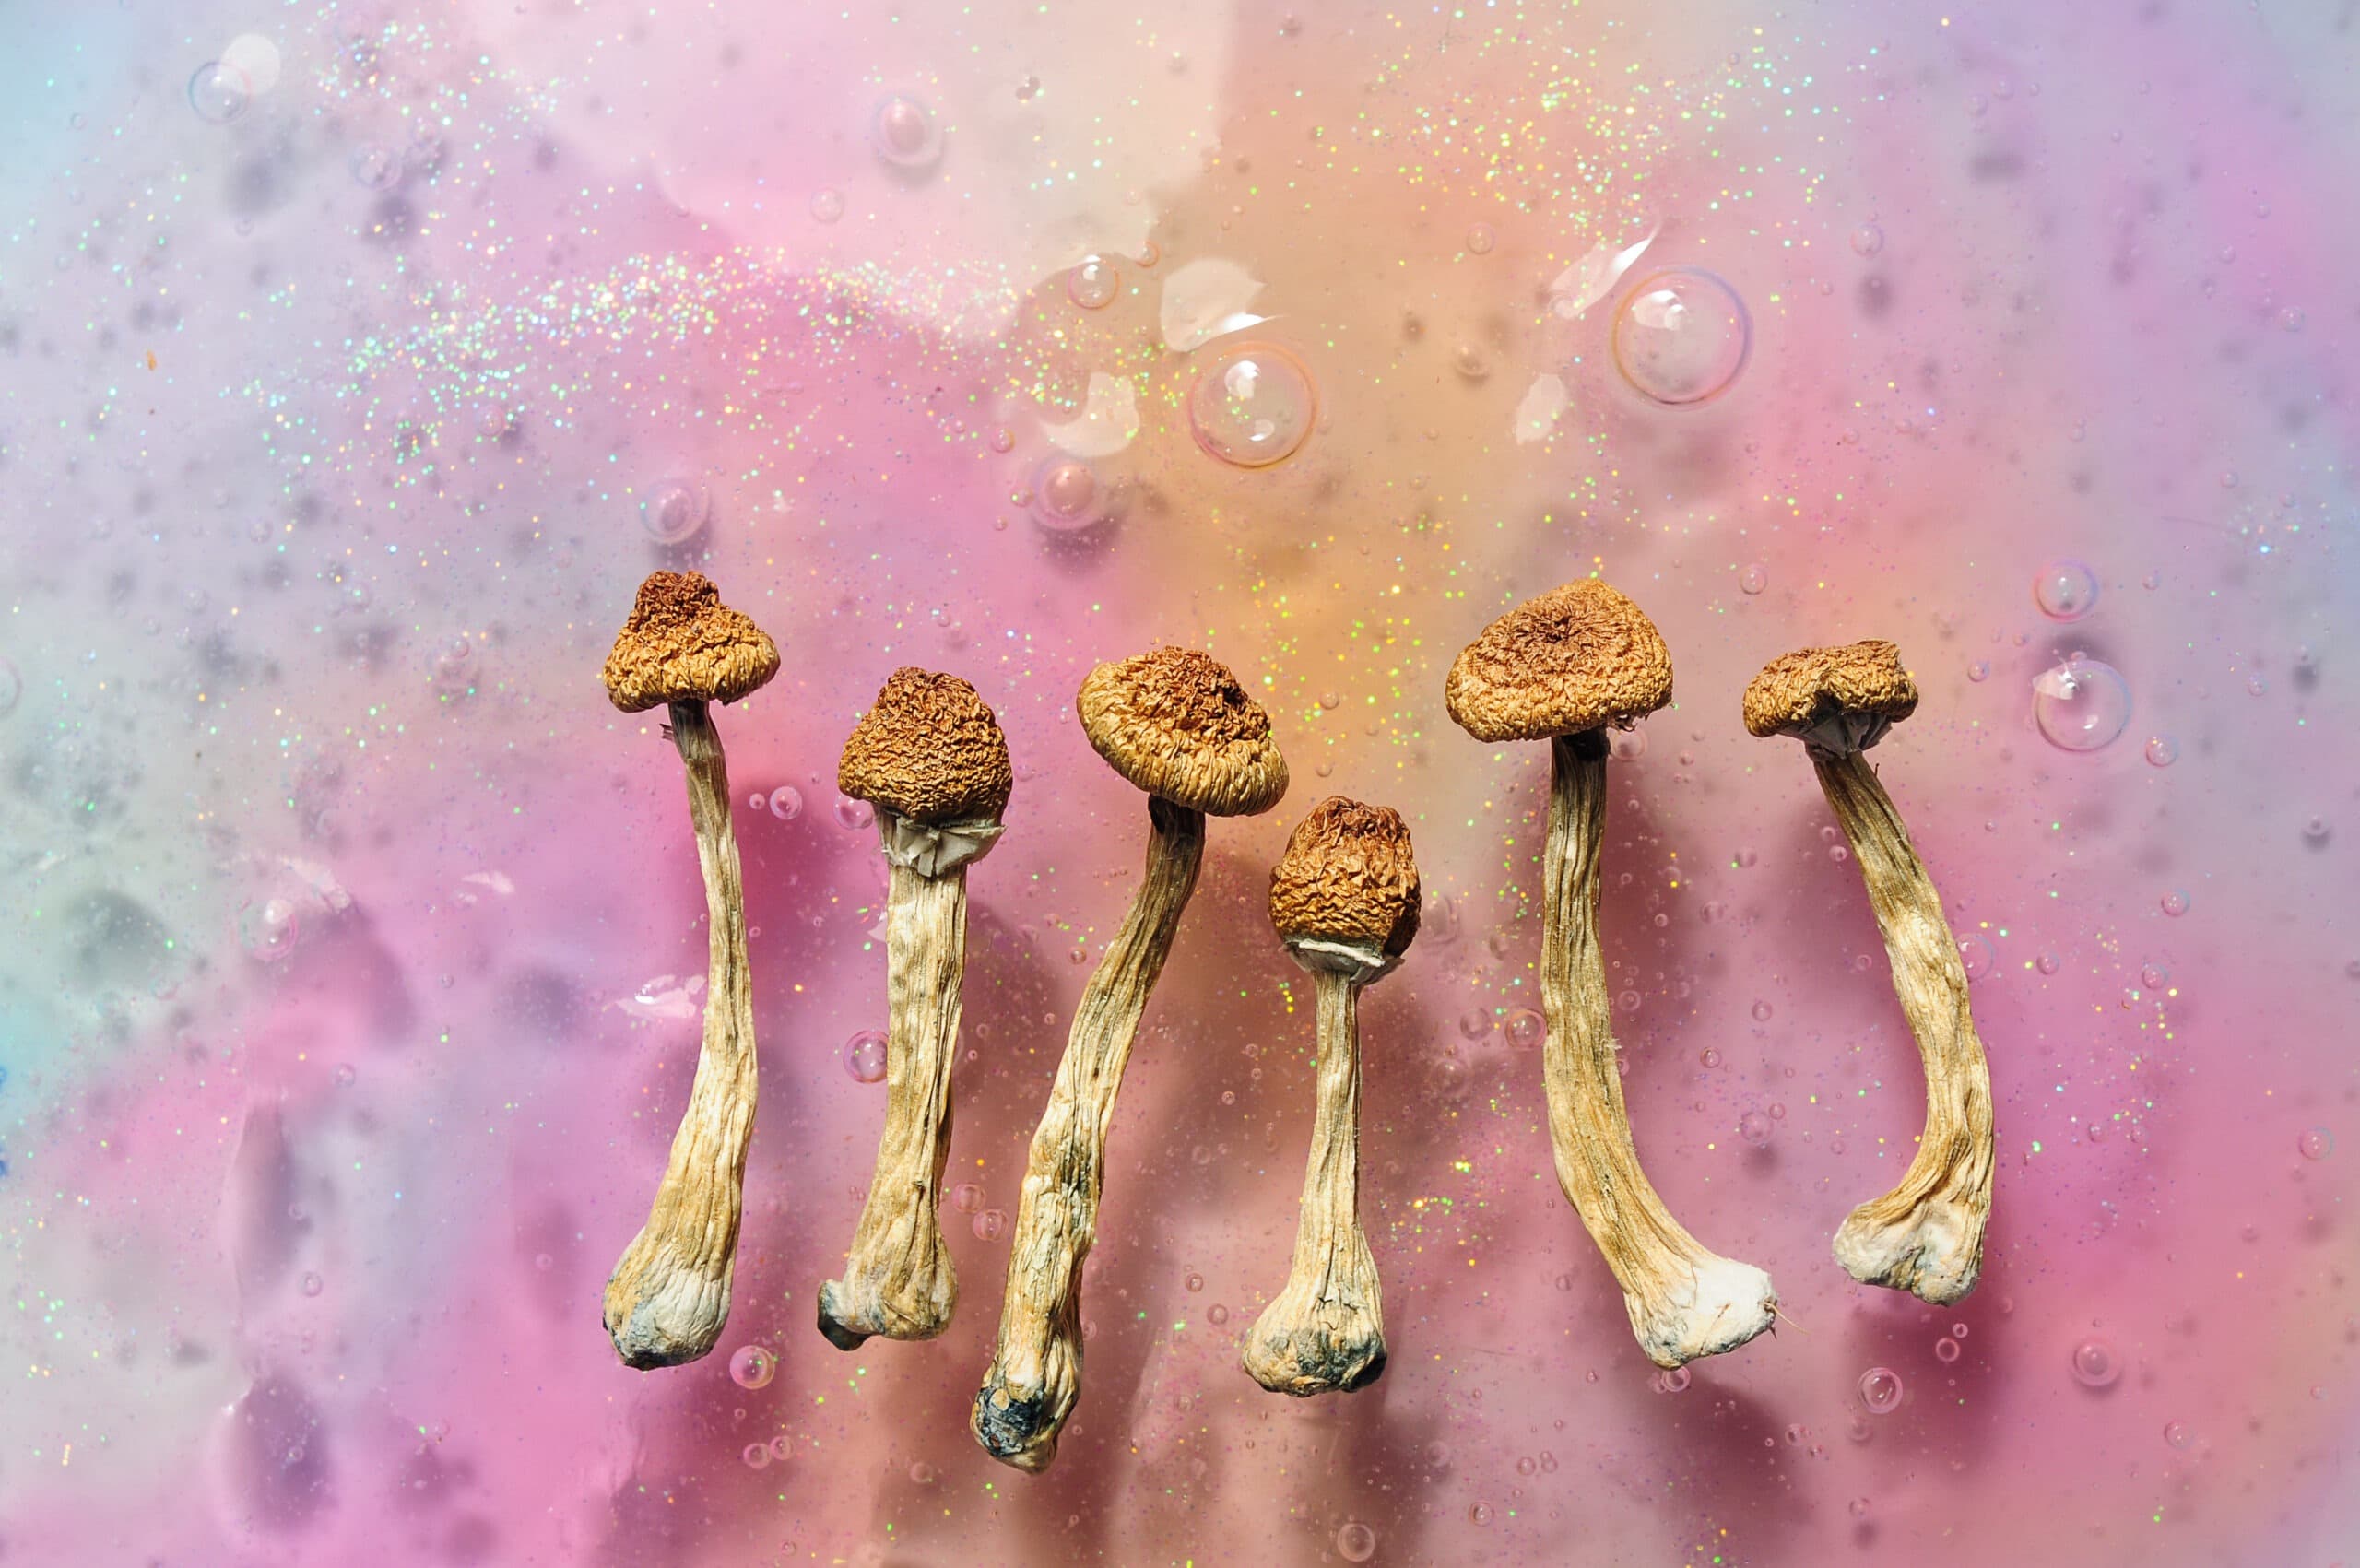 https://healingmaps.com/wp-content/uploads/2021/04/How-Long-Do-Magic-Mushrooms-Last-scaled.jpg